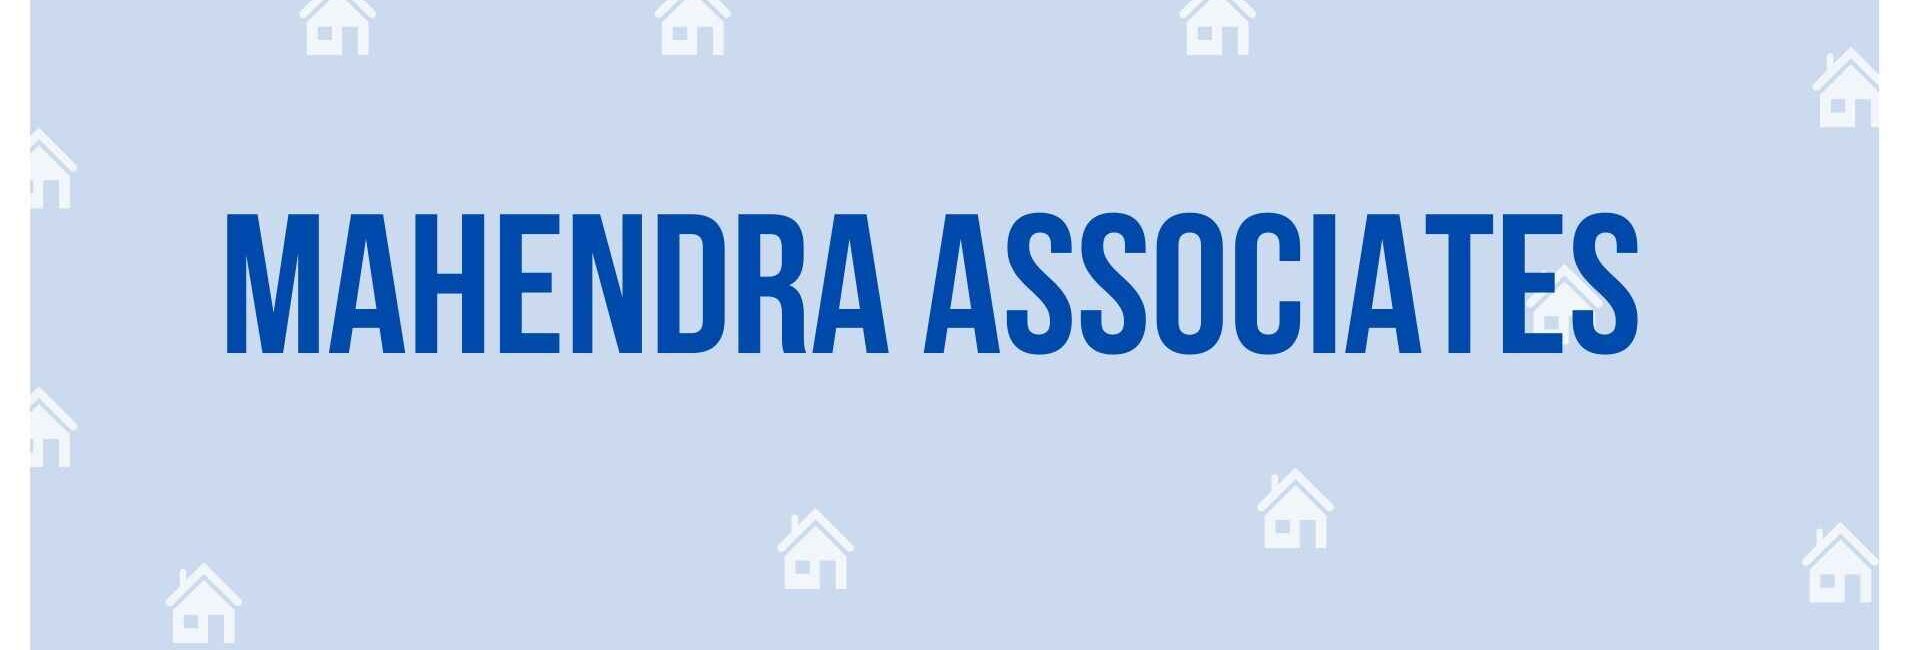 Mahendra Associates - Property Dealer in Noida